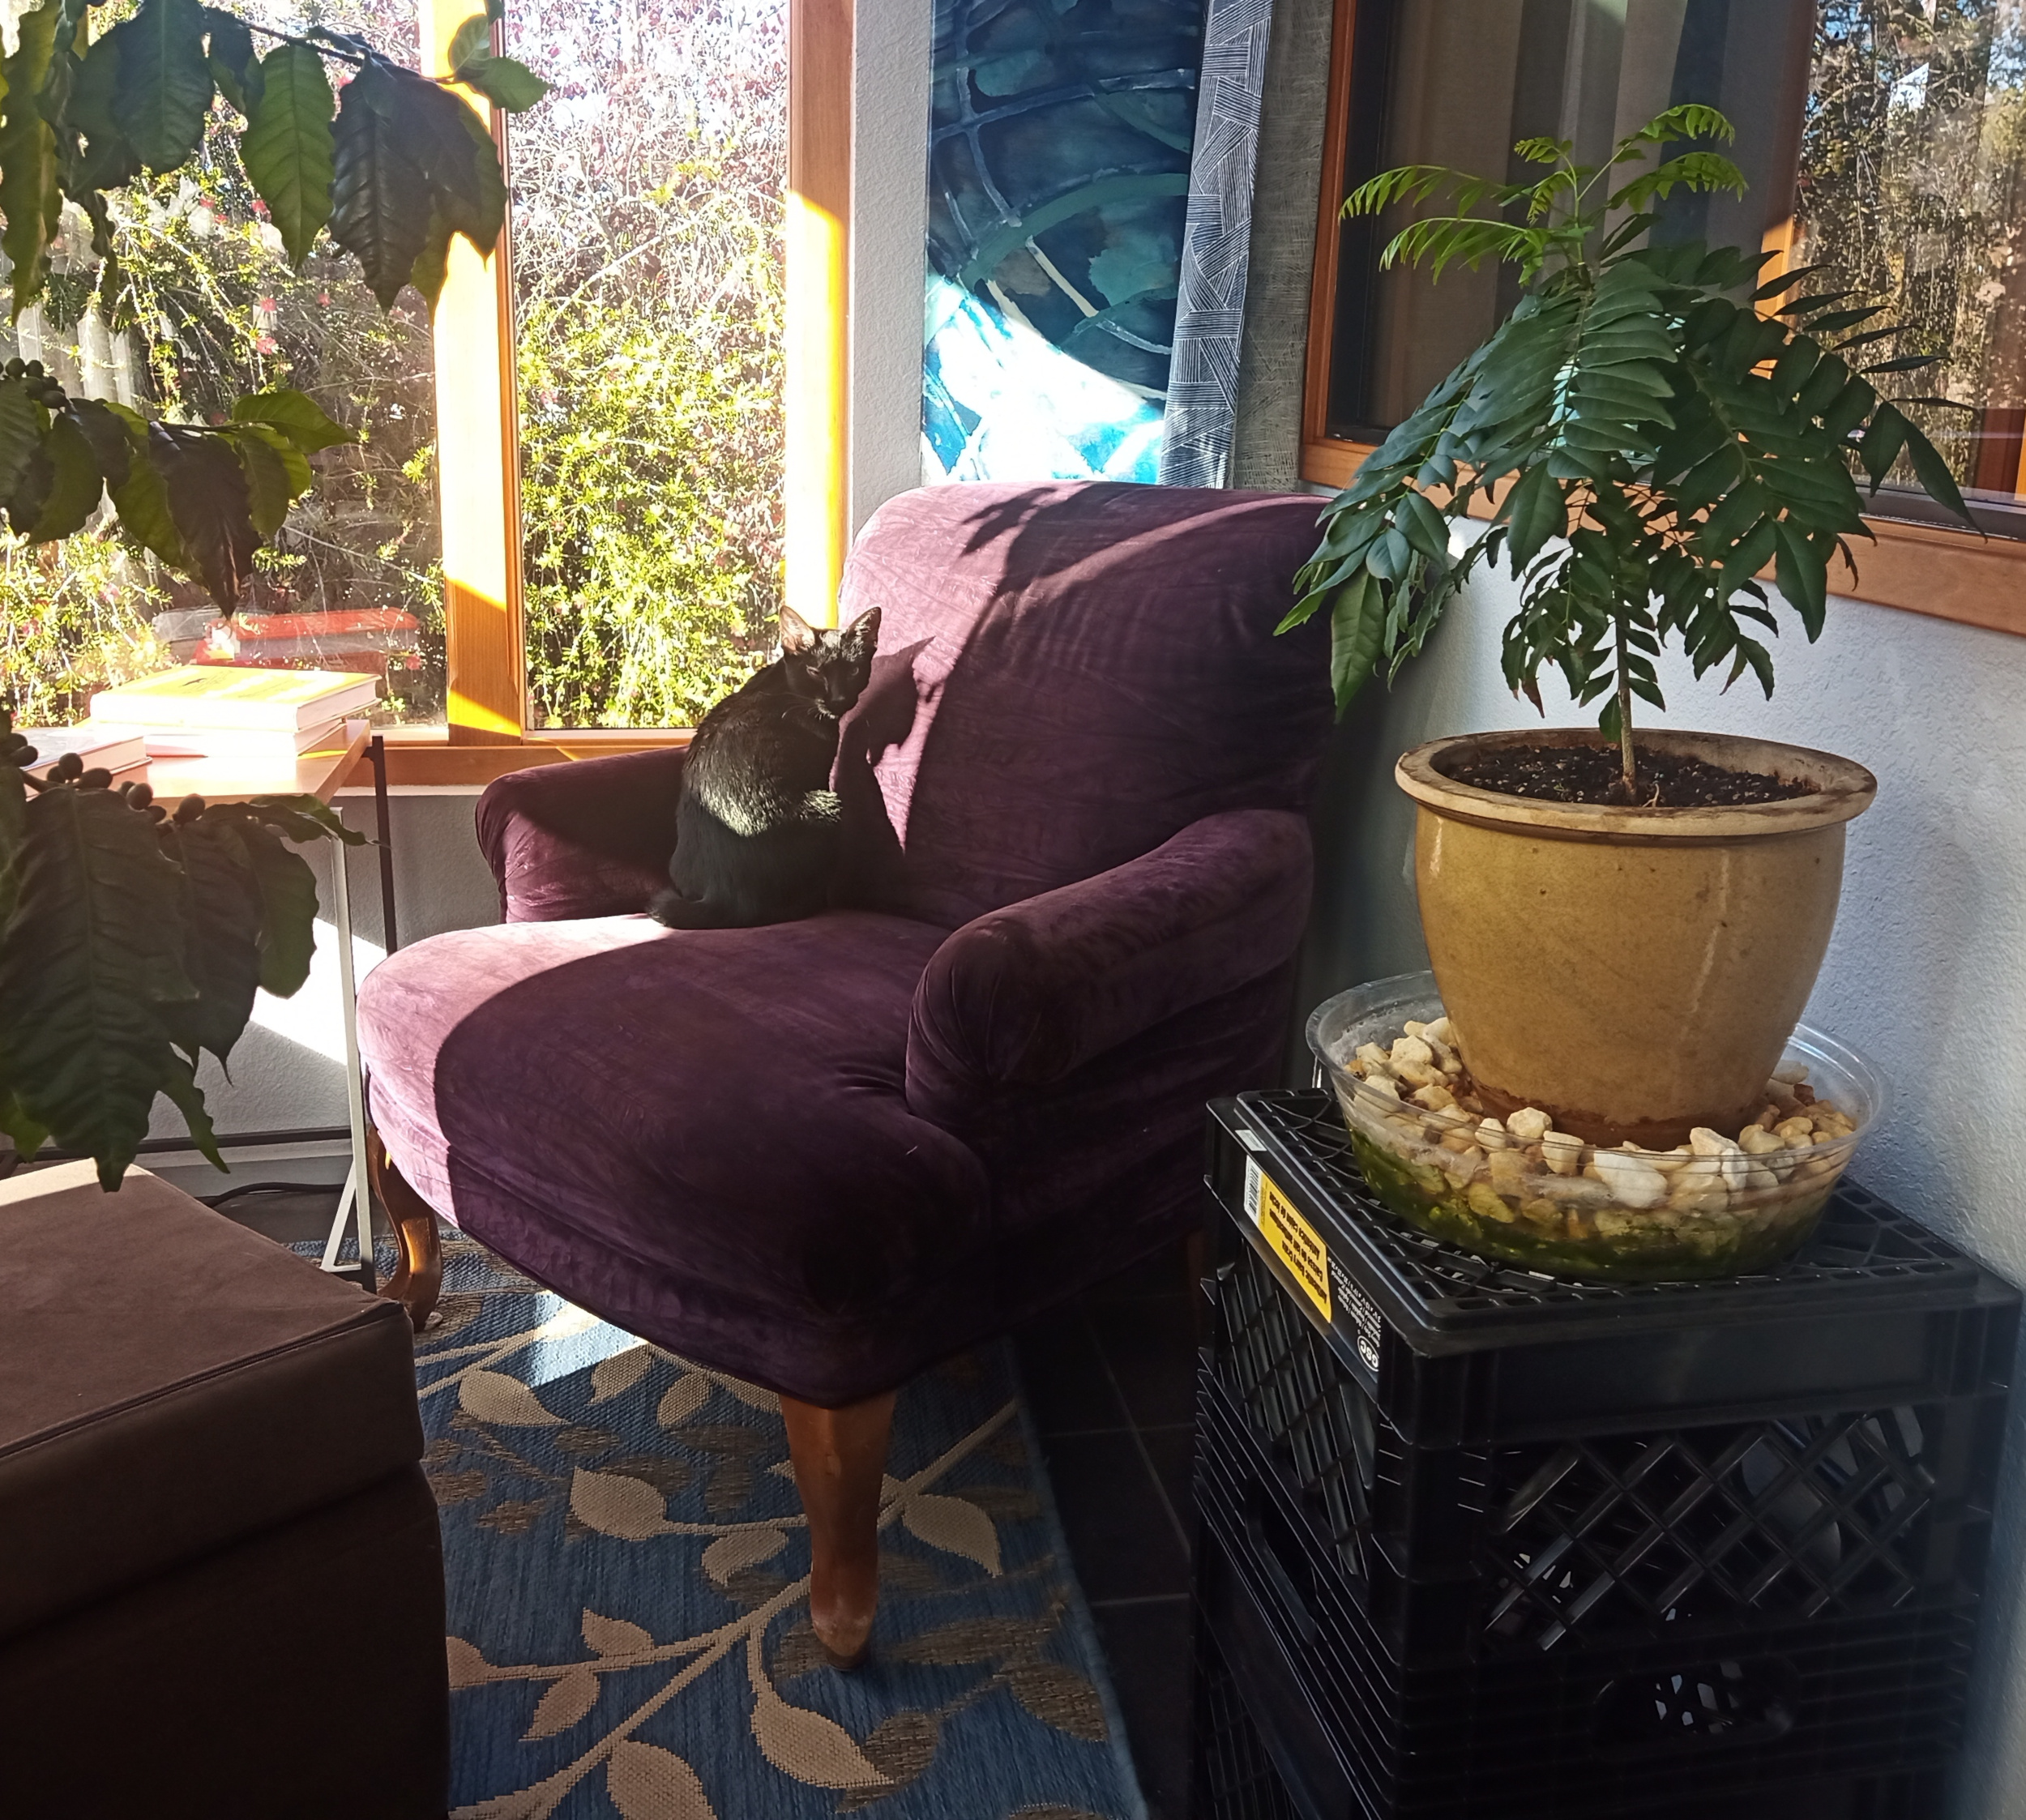 Black cat sitting in sunlight on purple armchair.